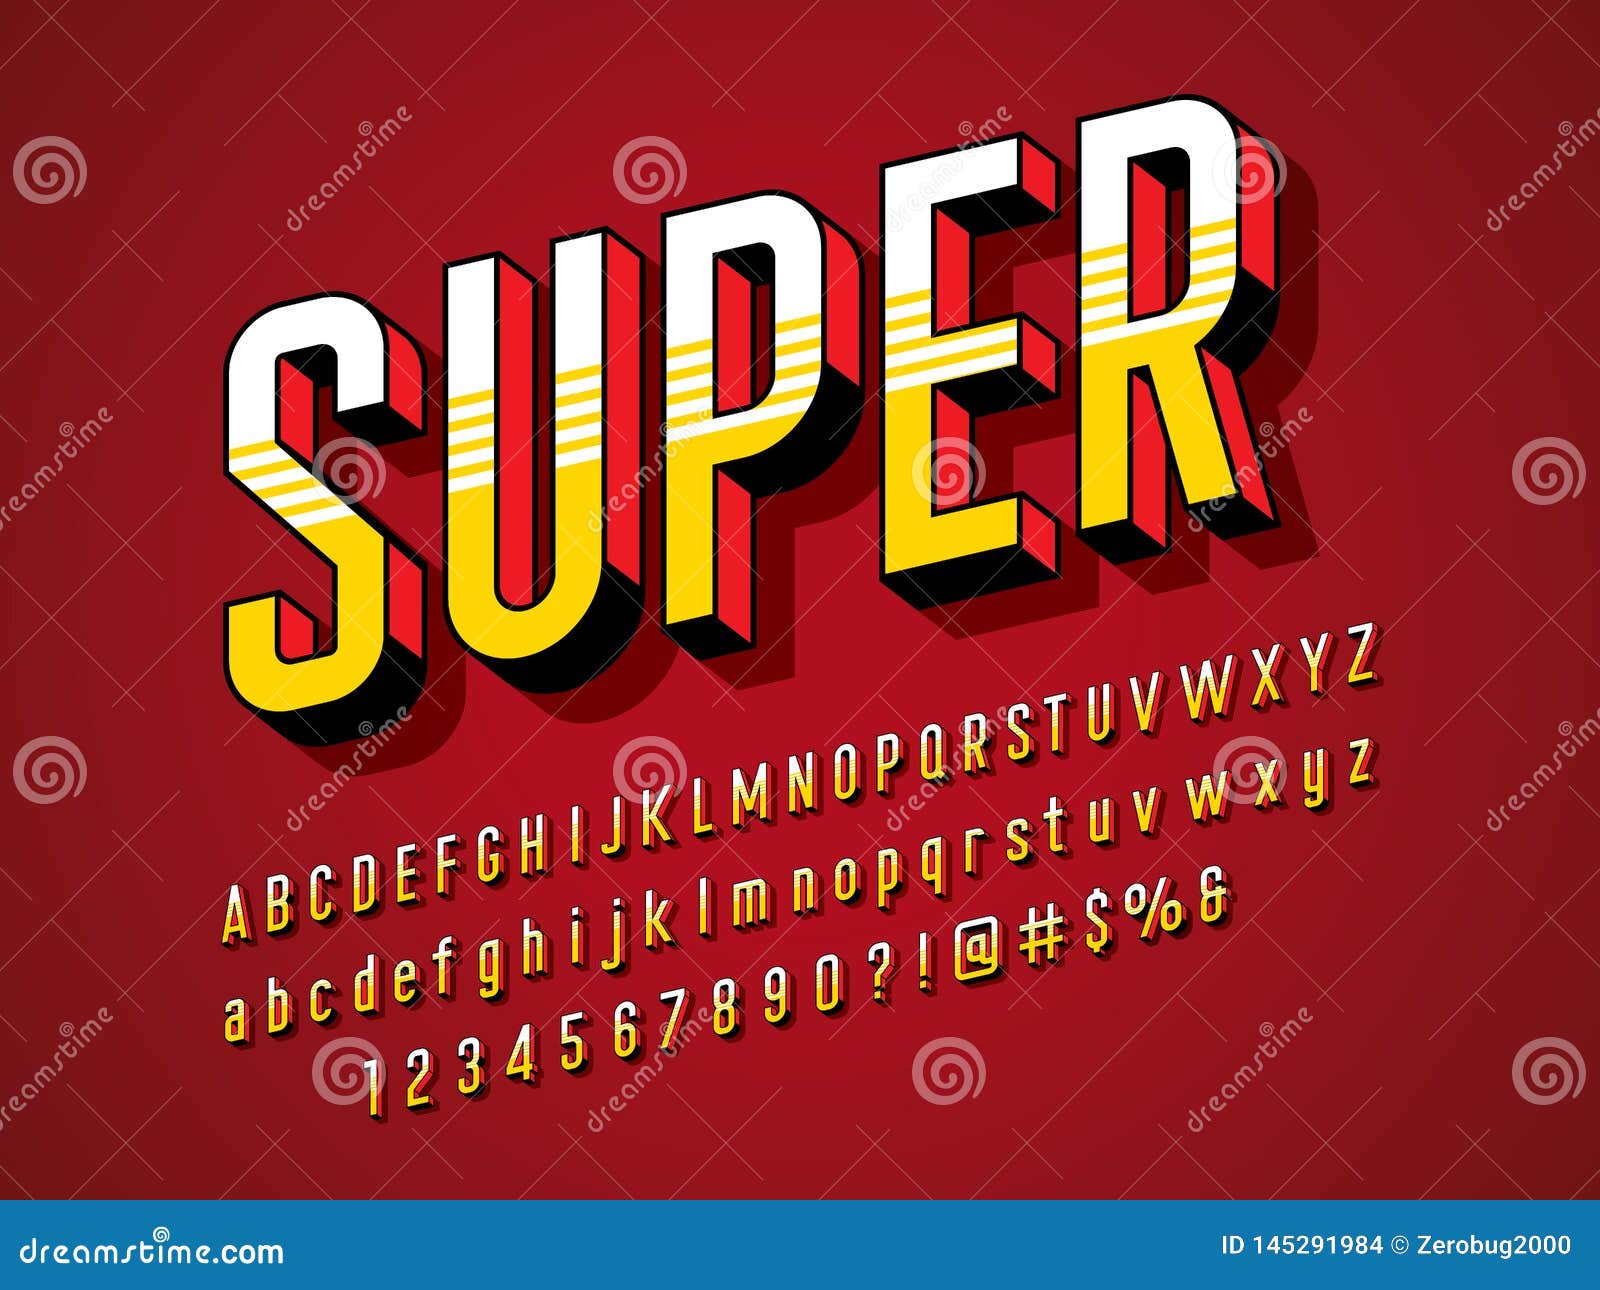 Superhero Font Stock Vector. Illustration Of Typo, Font - 145291984